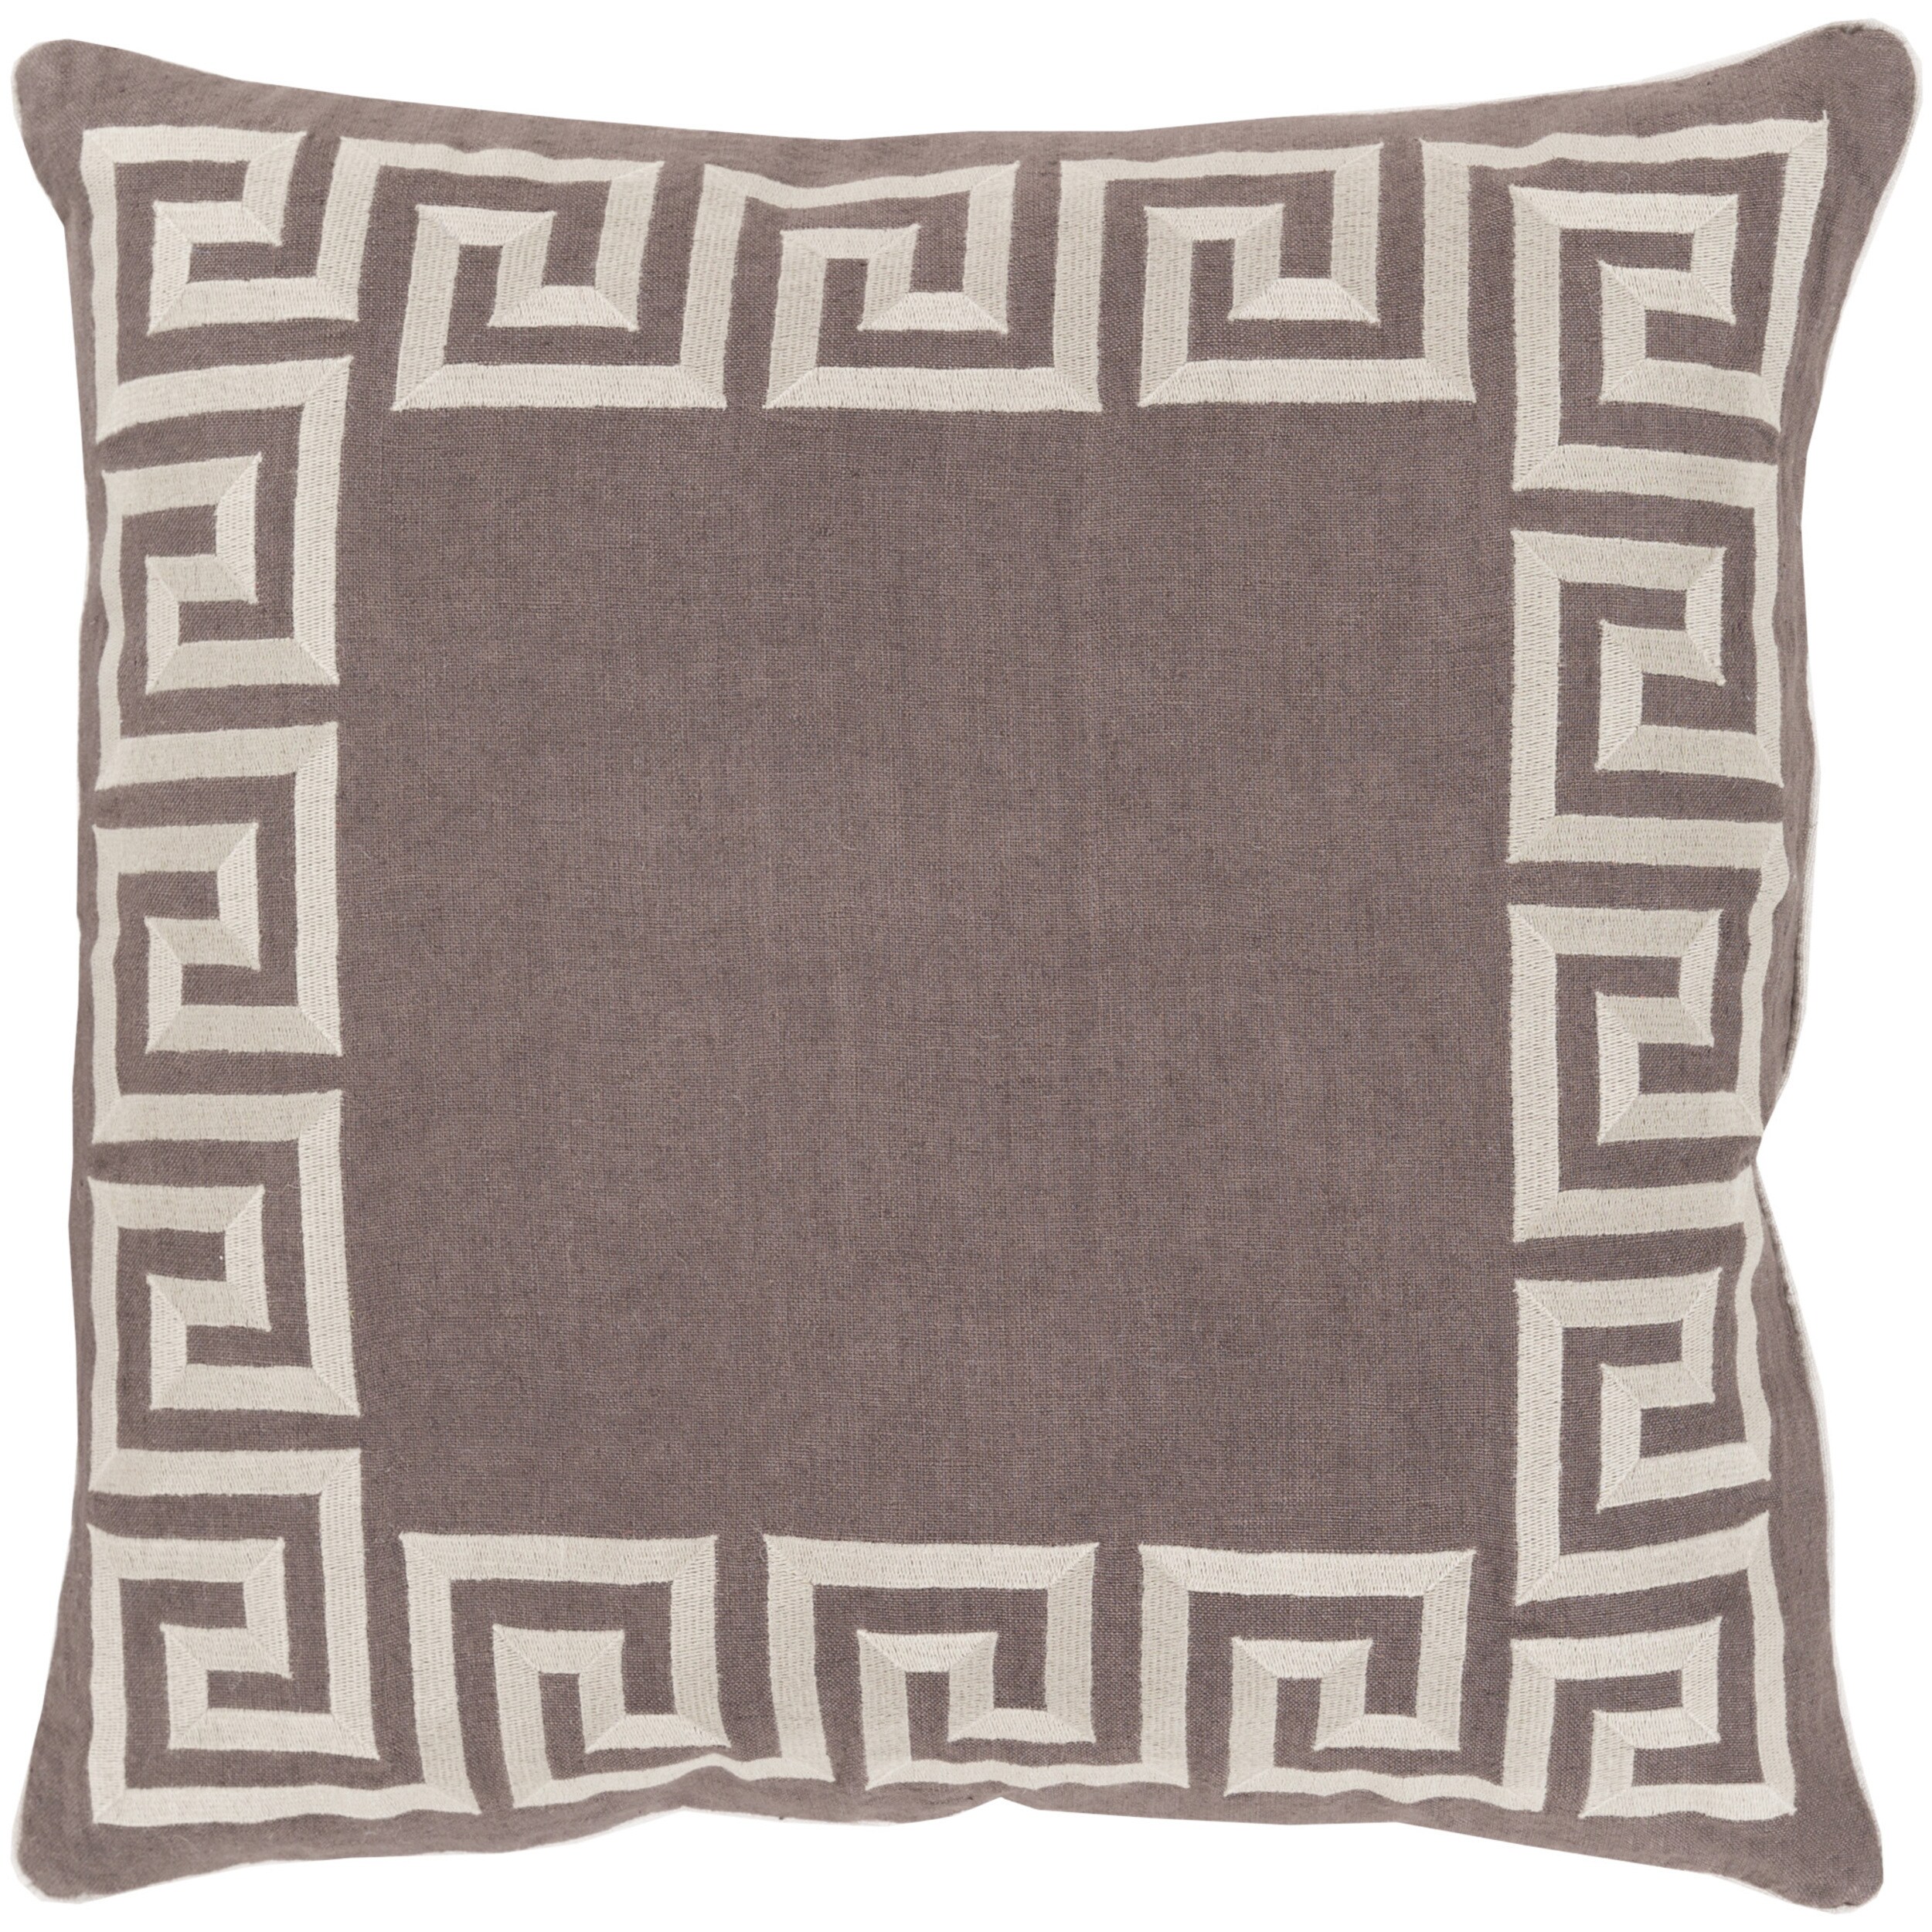 Decorative Casady Geometric 18-inch Throw Pillow